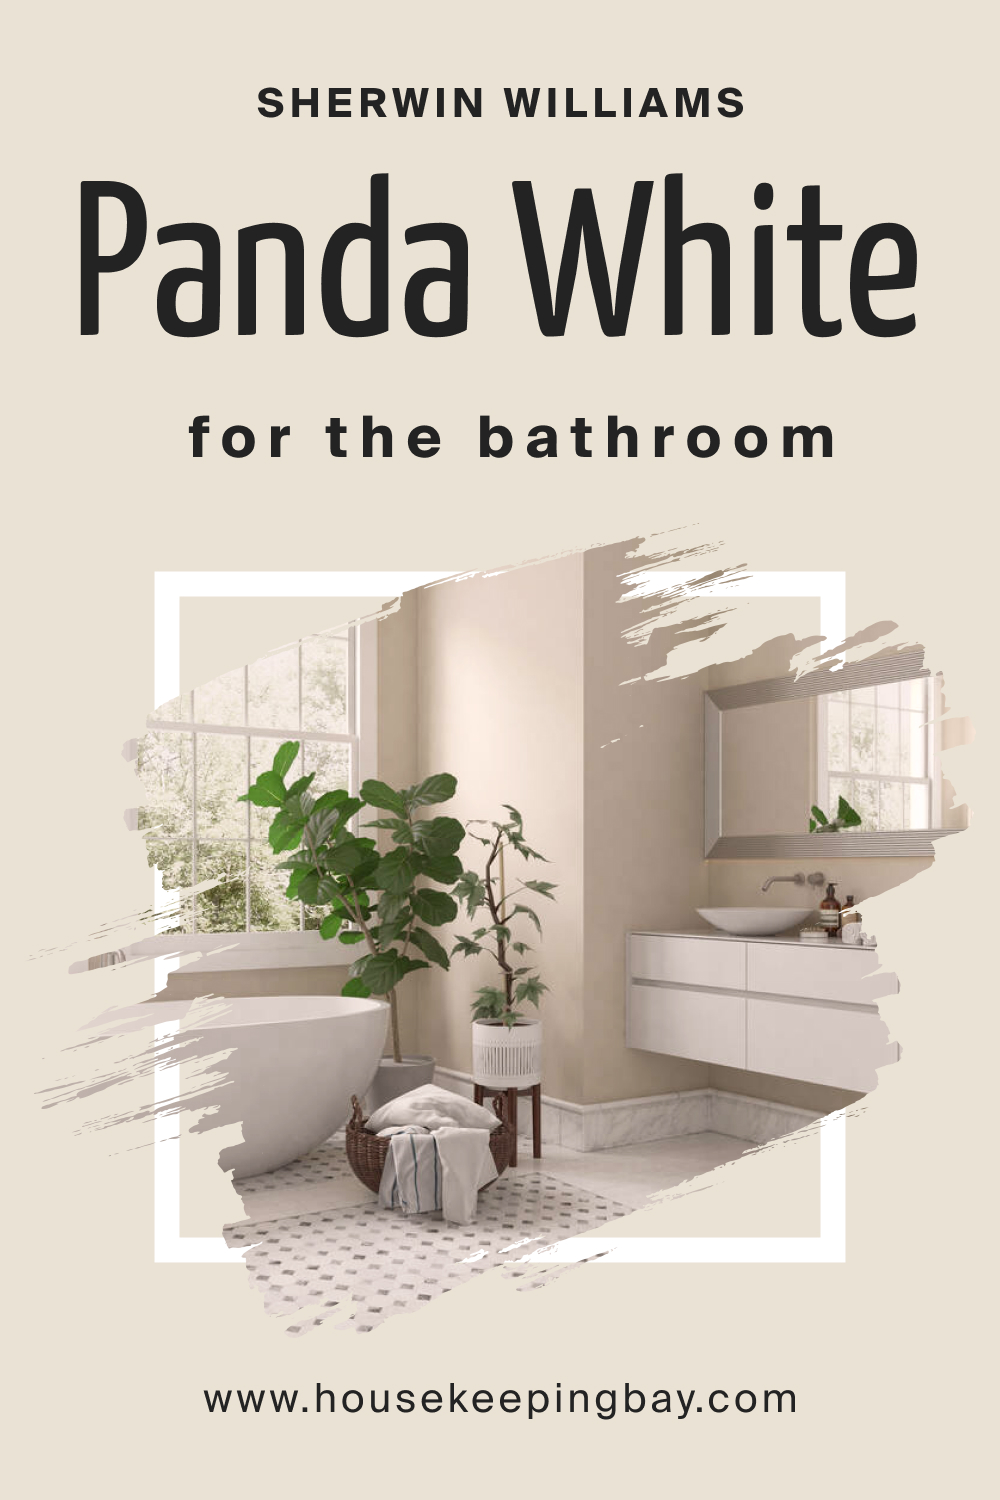 Sherwin Williams. SW Panda White in the Bathroom